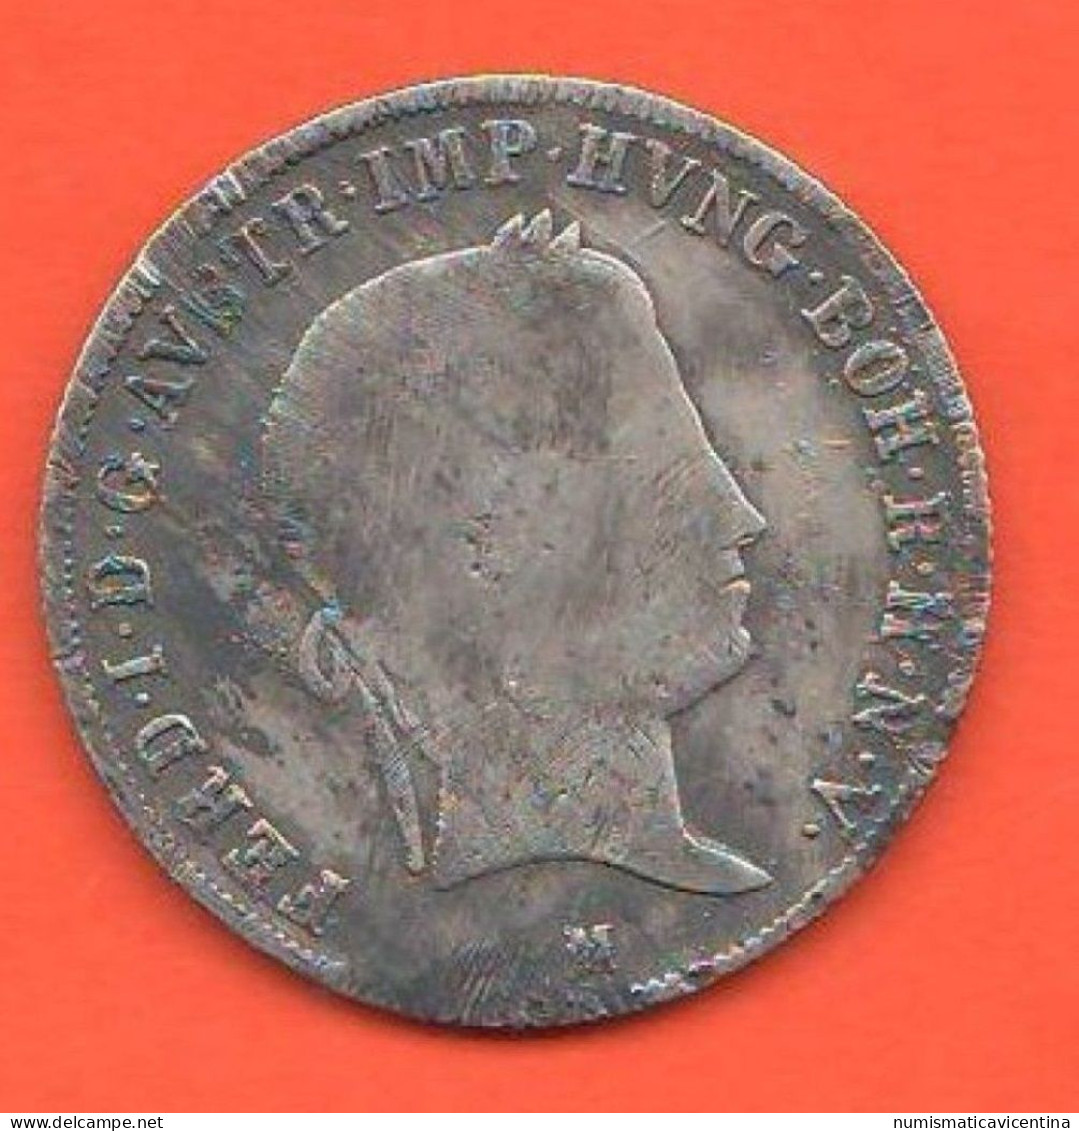 Milano Lombardo Veneto 20 Kreuzer 1842 Mi Coinage Imperator Ferdinandus I° Silver Coin - Austrian Administration